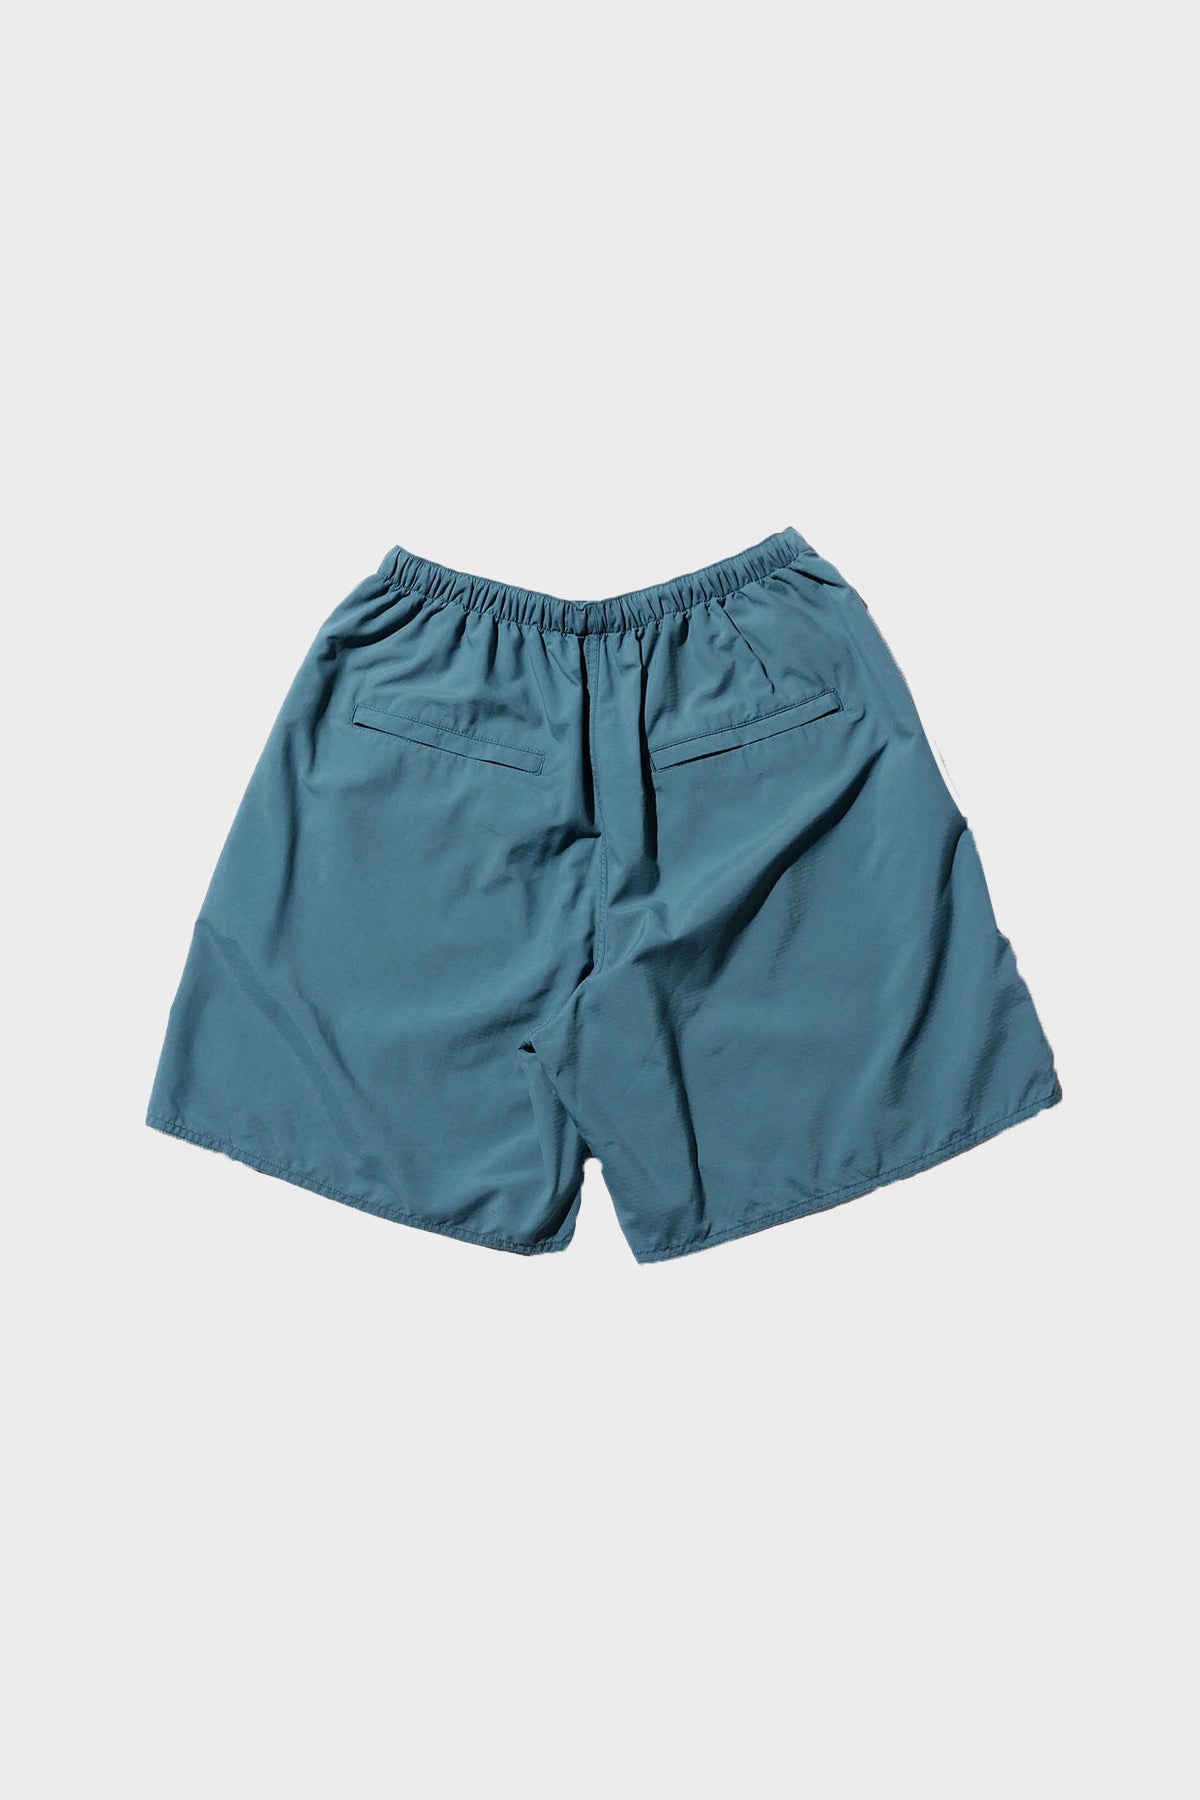 MIL Athletic Shorts Nylon - Blue - 2